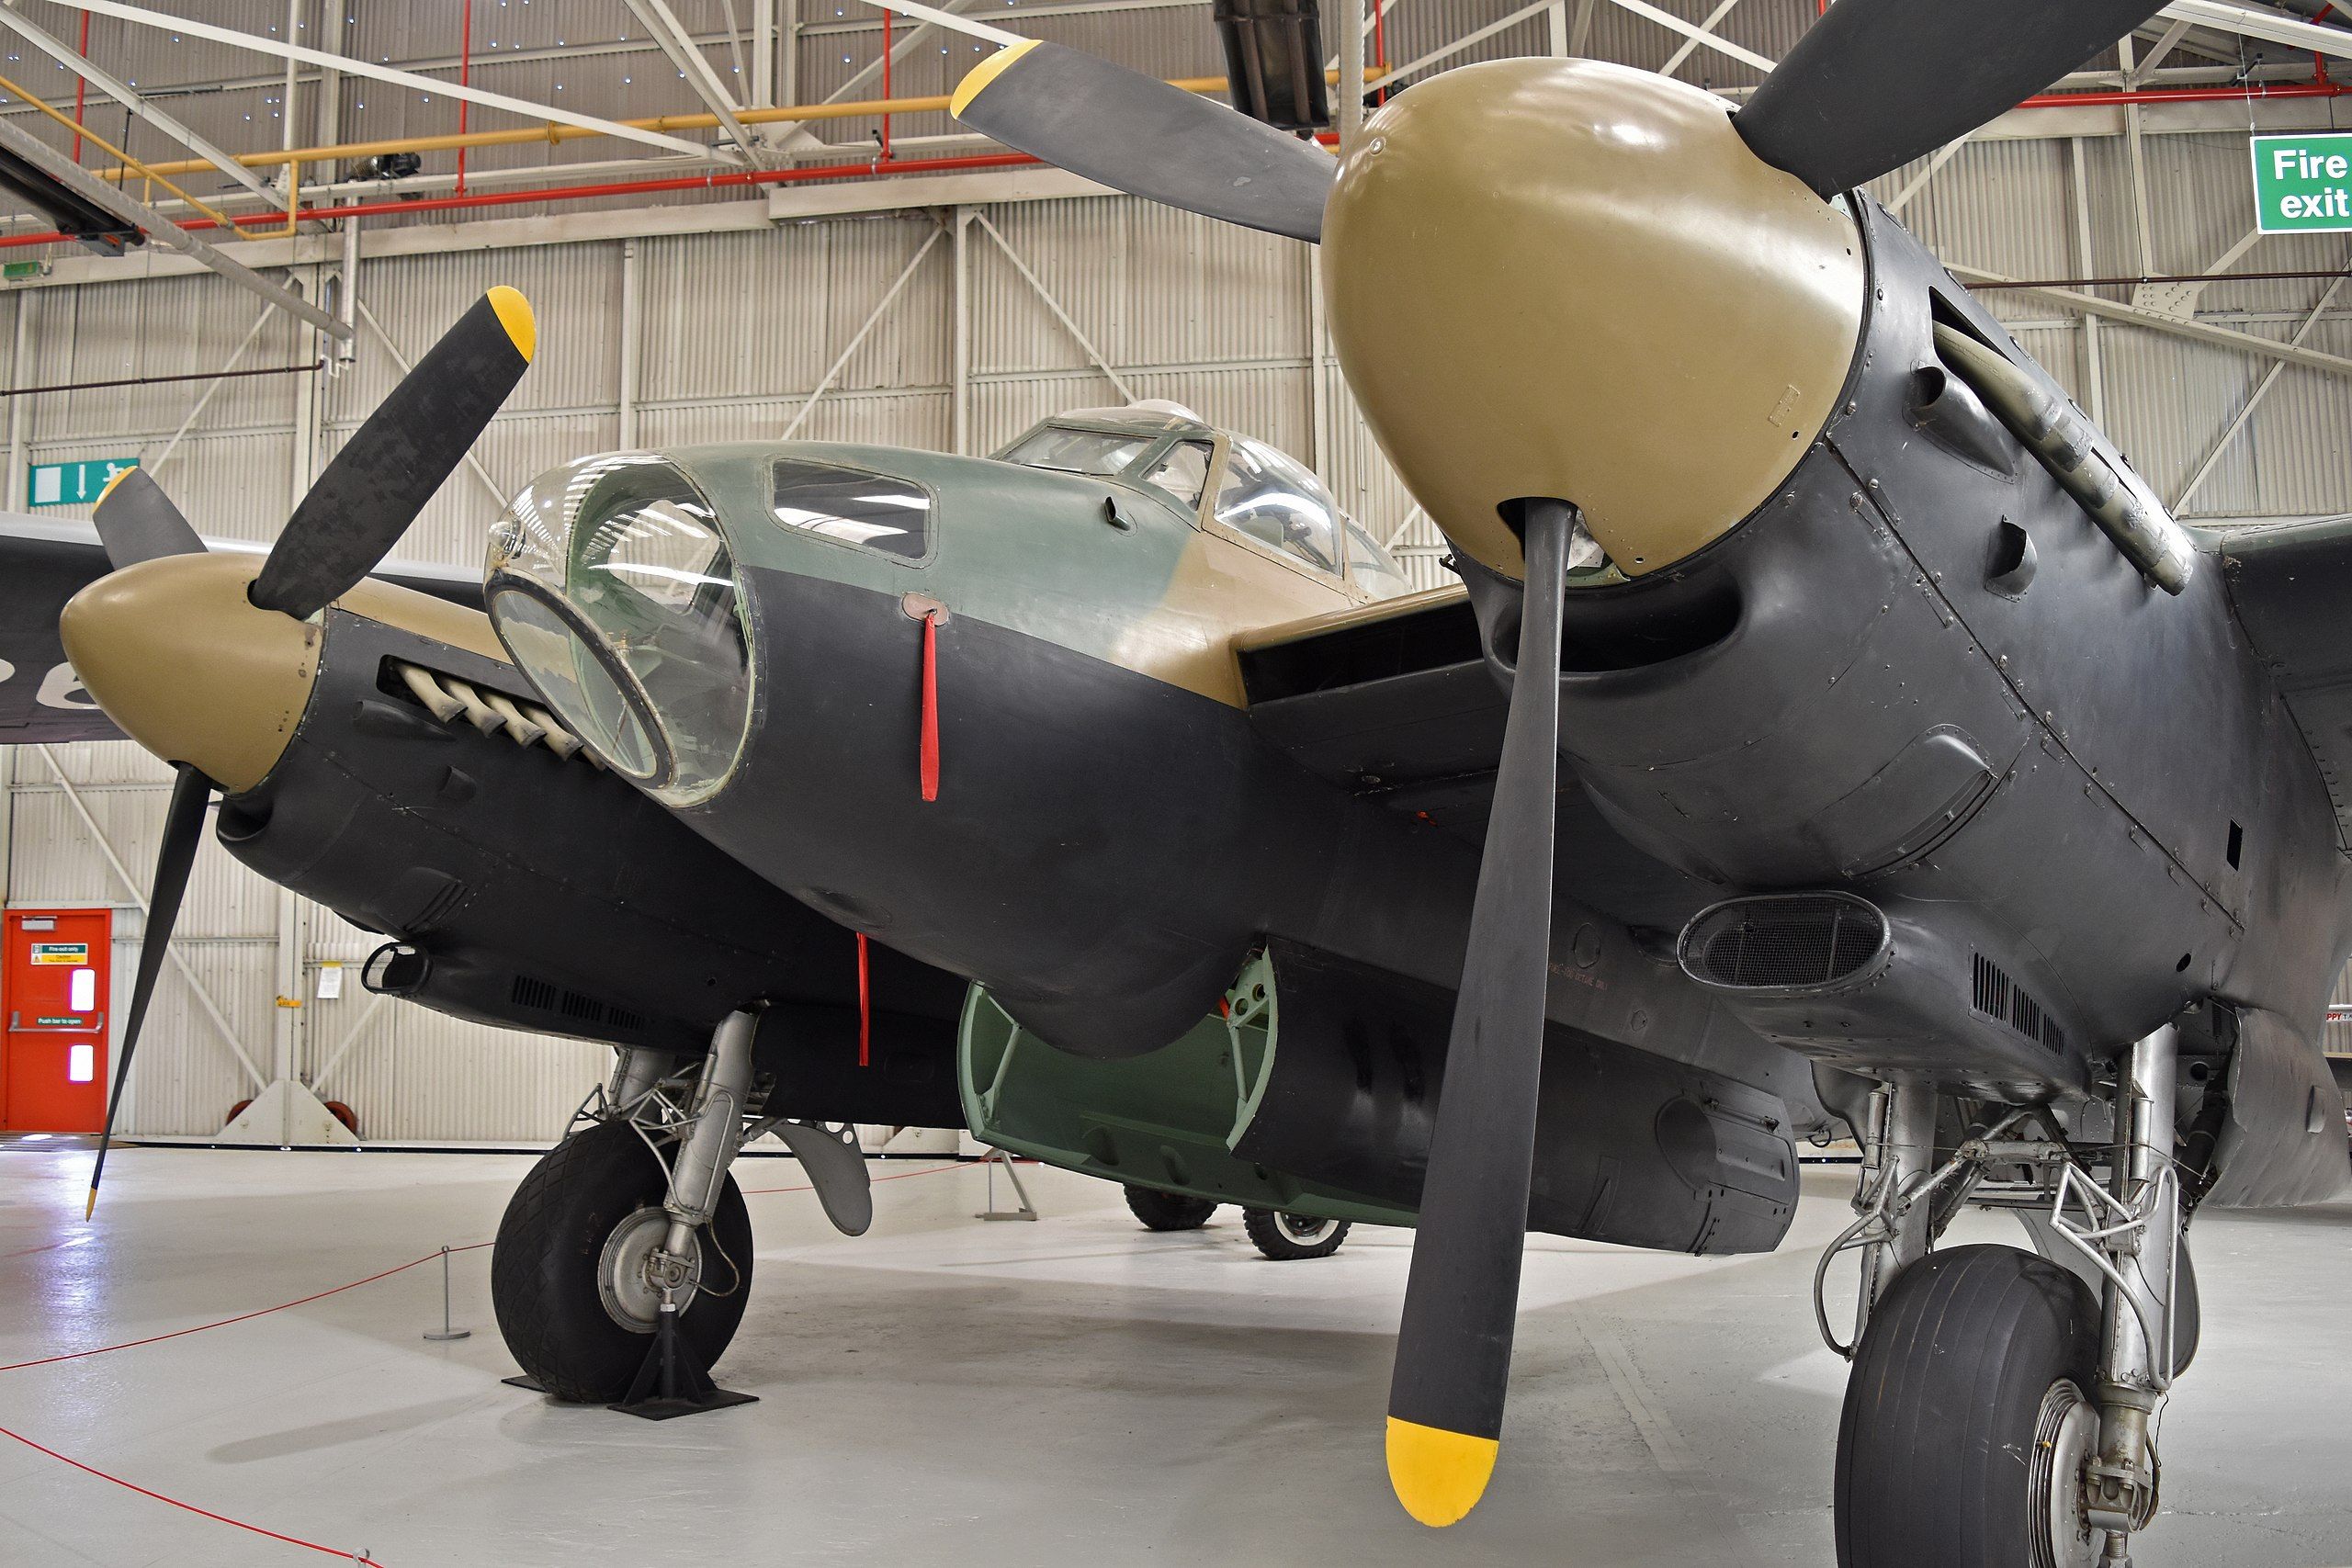 A De Havilland DH98 Mosquito sitting in a hangar.